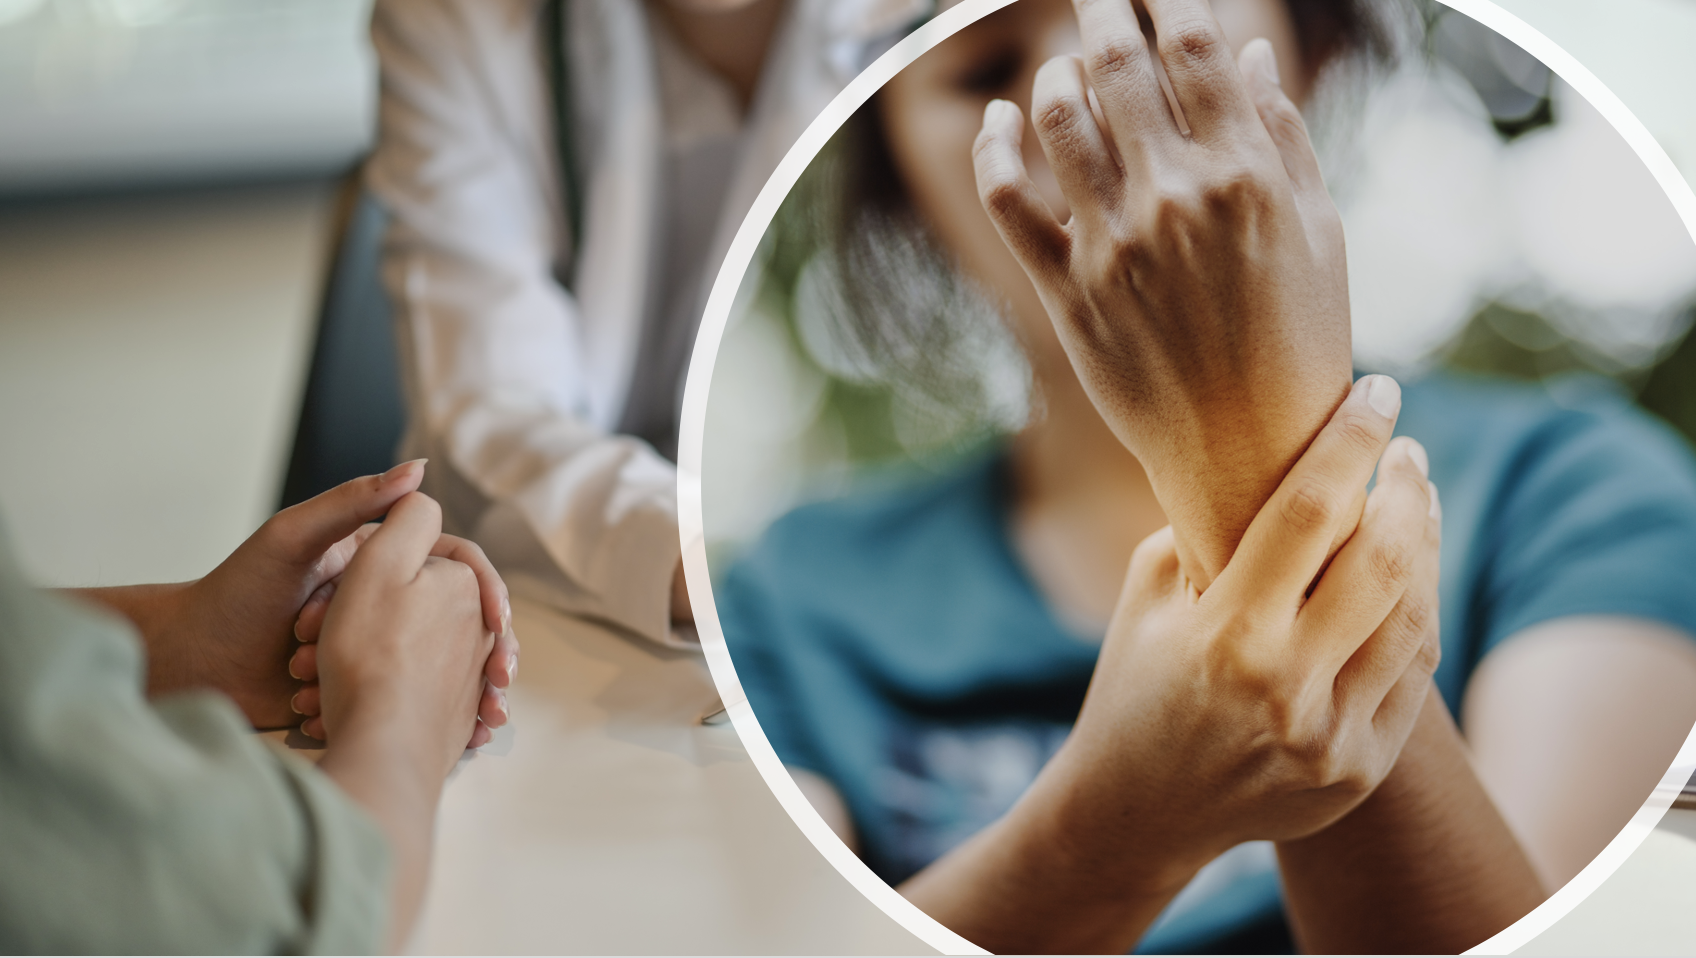 Patients With Rheumatoid Arthritis Have an Increased Risk of Multimorbidity Burden